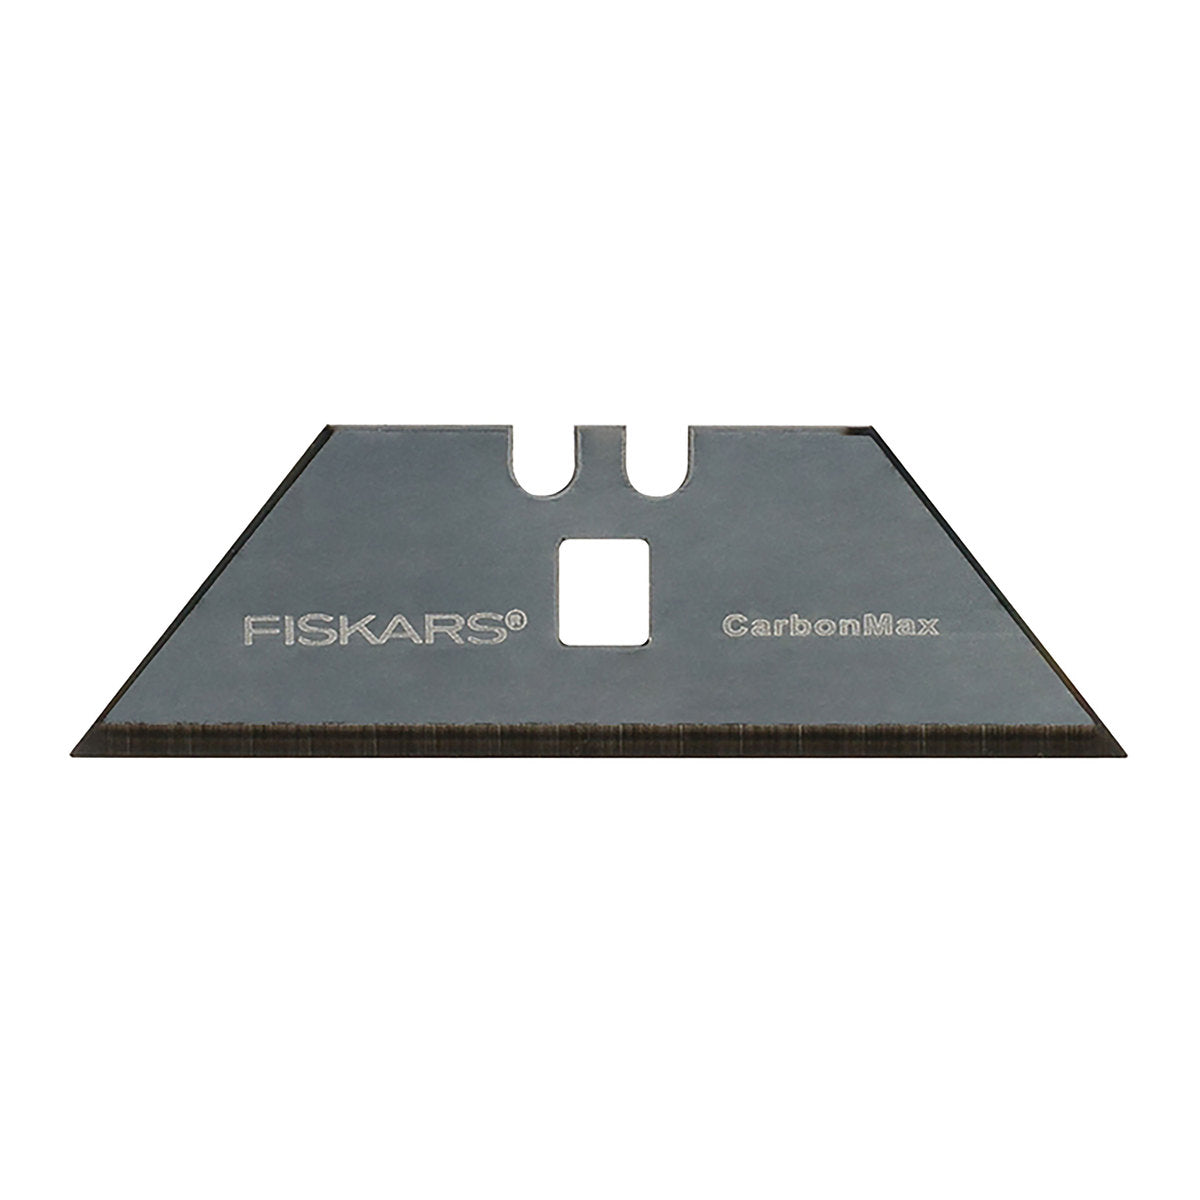 Fiskars CarbonMax Utility Knife Refill Blades (5 Pack)